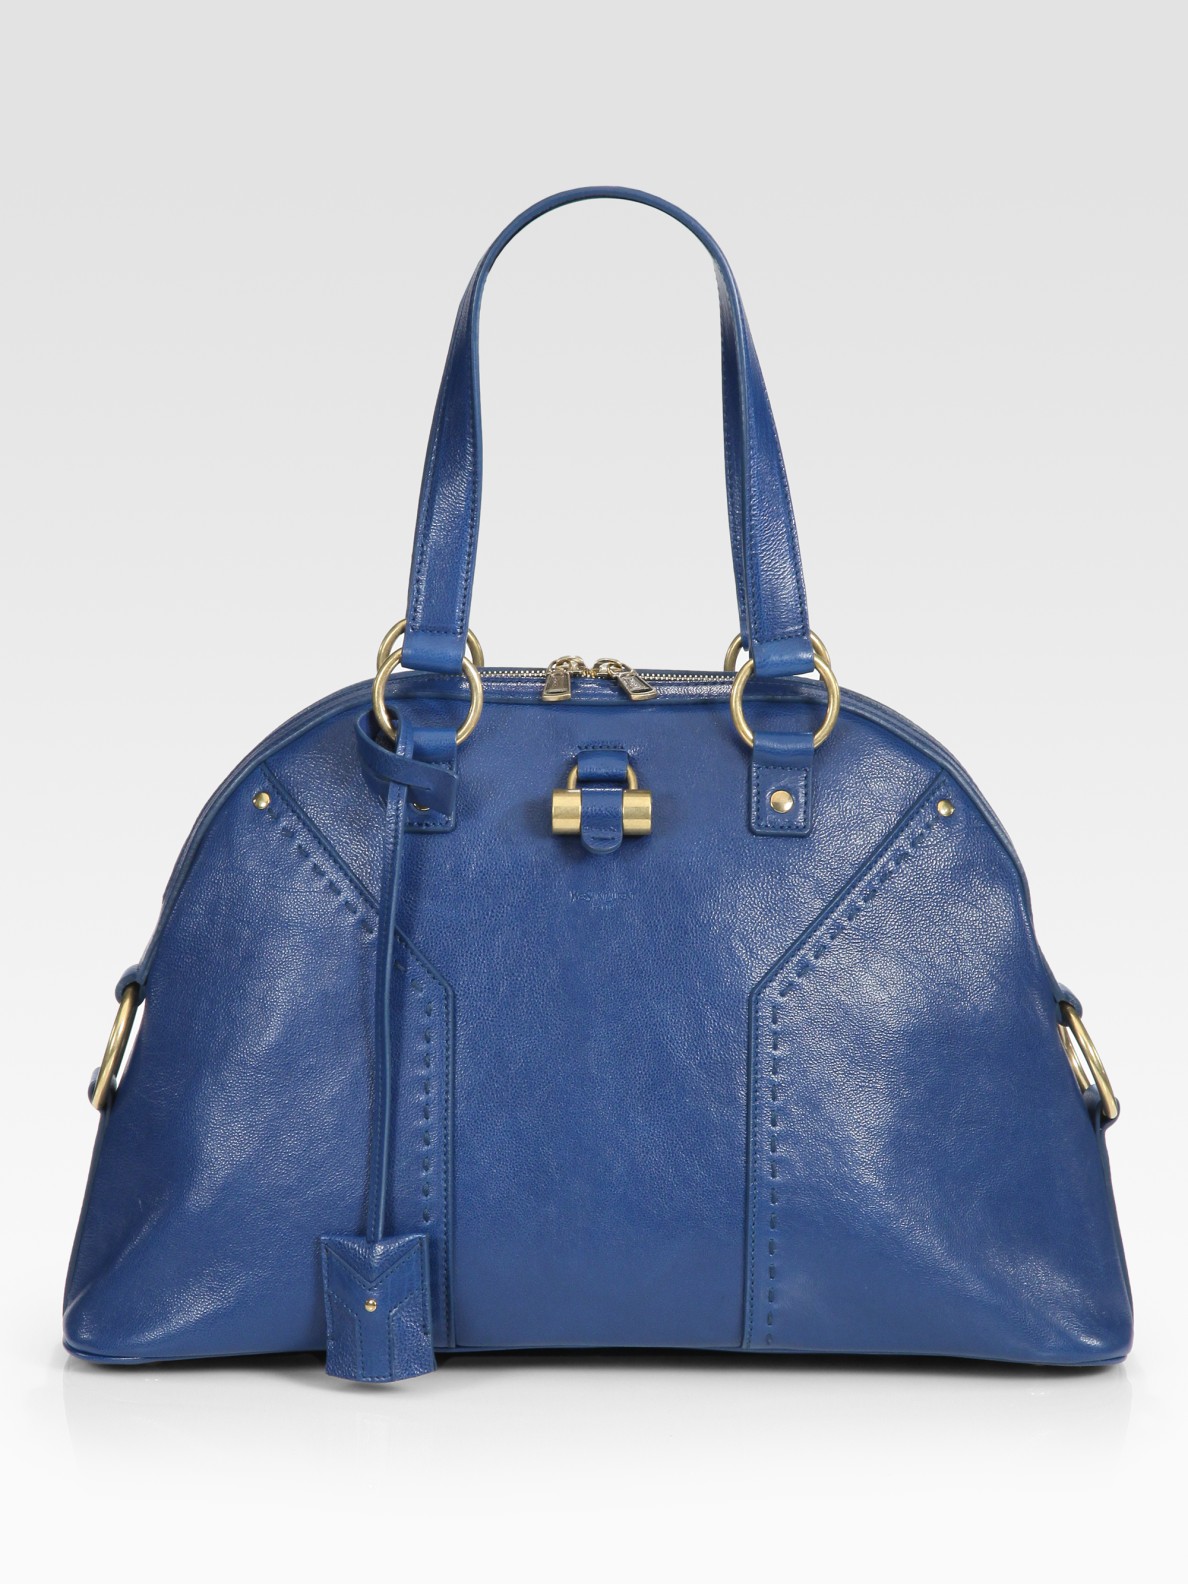 Saint Laurent Ysl Large Muse Handbag in Blue - Lyst